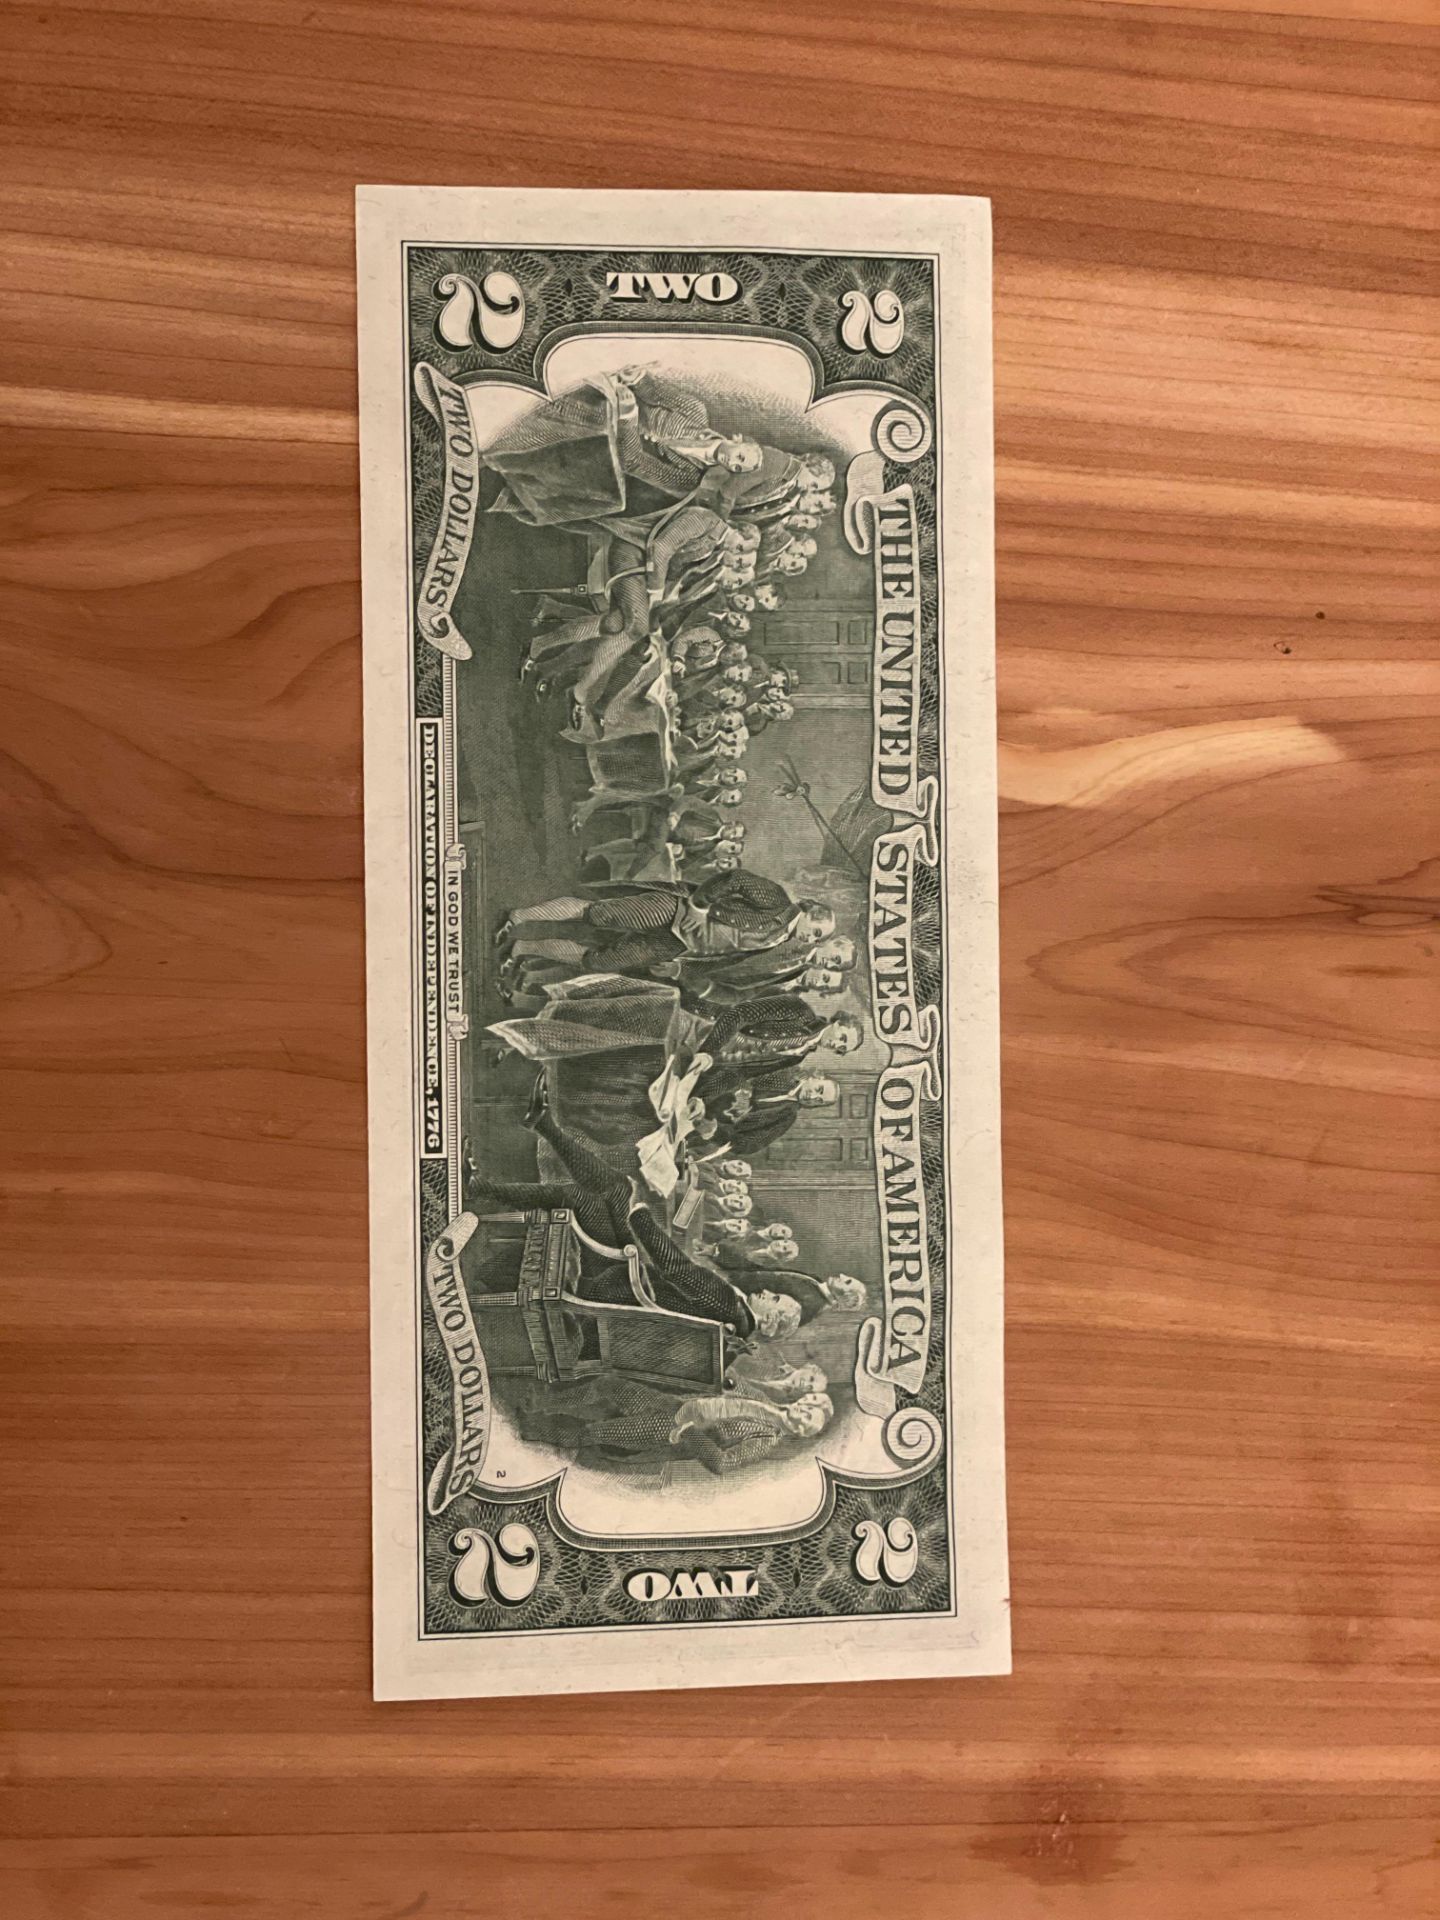 $2 Bills - Image 7 of 7